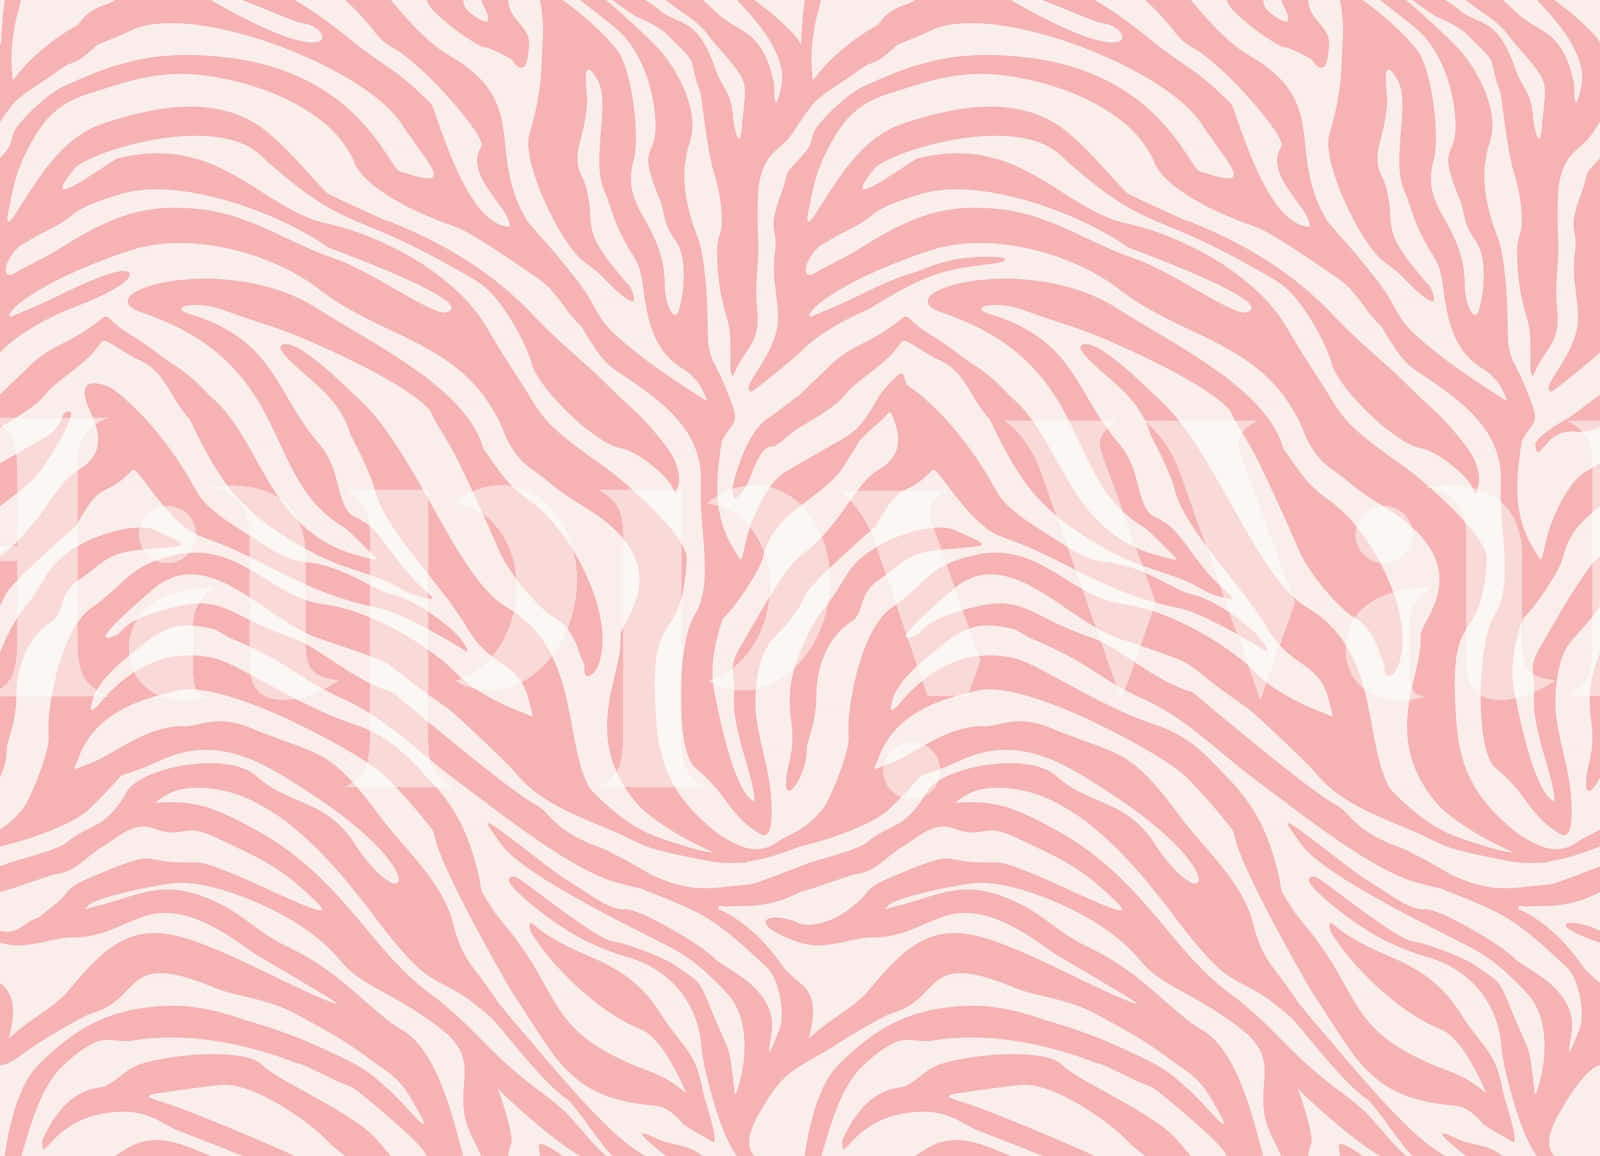 A Pink And White Zebra Print Pattern